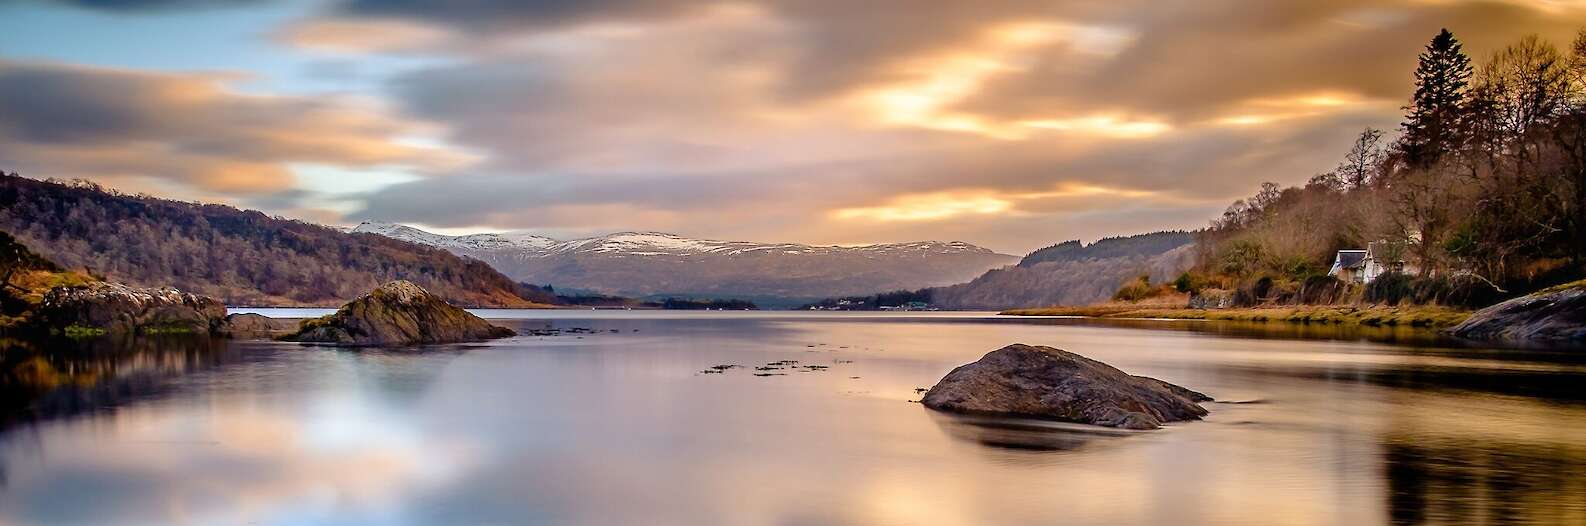 Loch Aline | Courtesy of Steven Marshall Photography - www.smarshall-photography.com